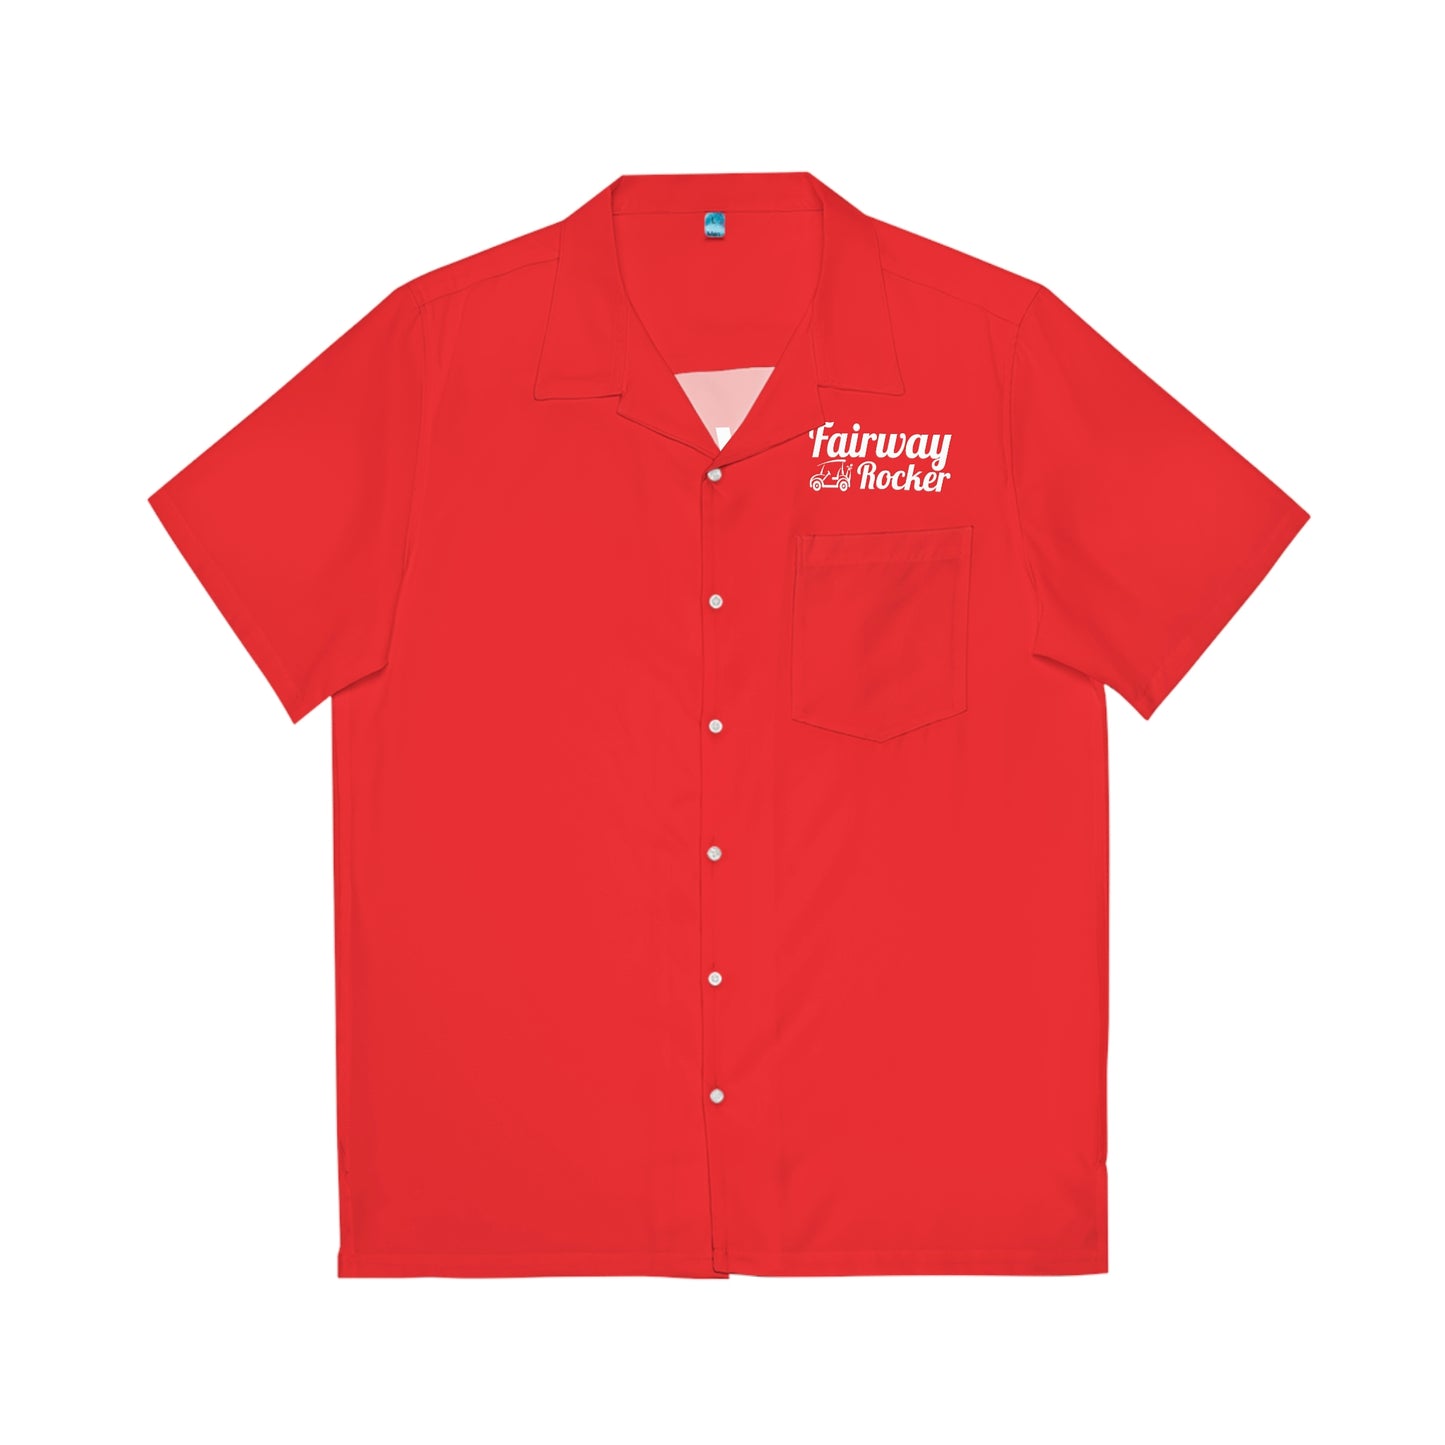 Fairway Rocker - Fairway Shirt / Hemd - red